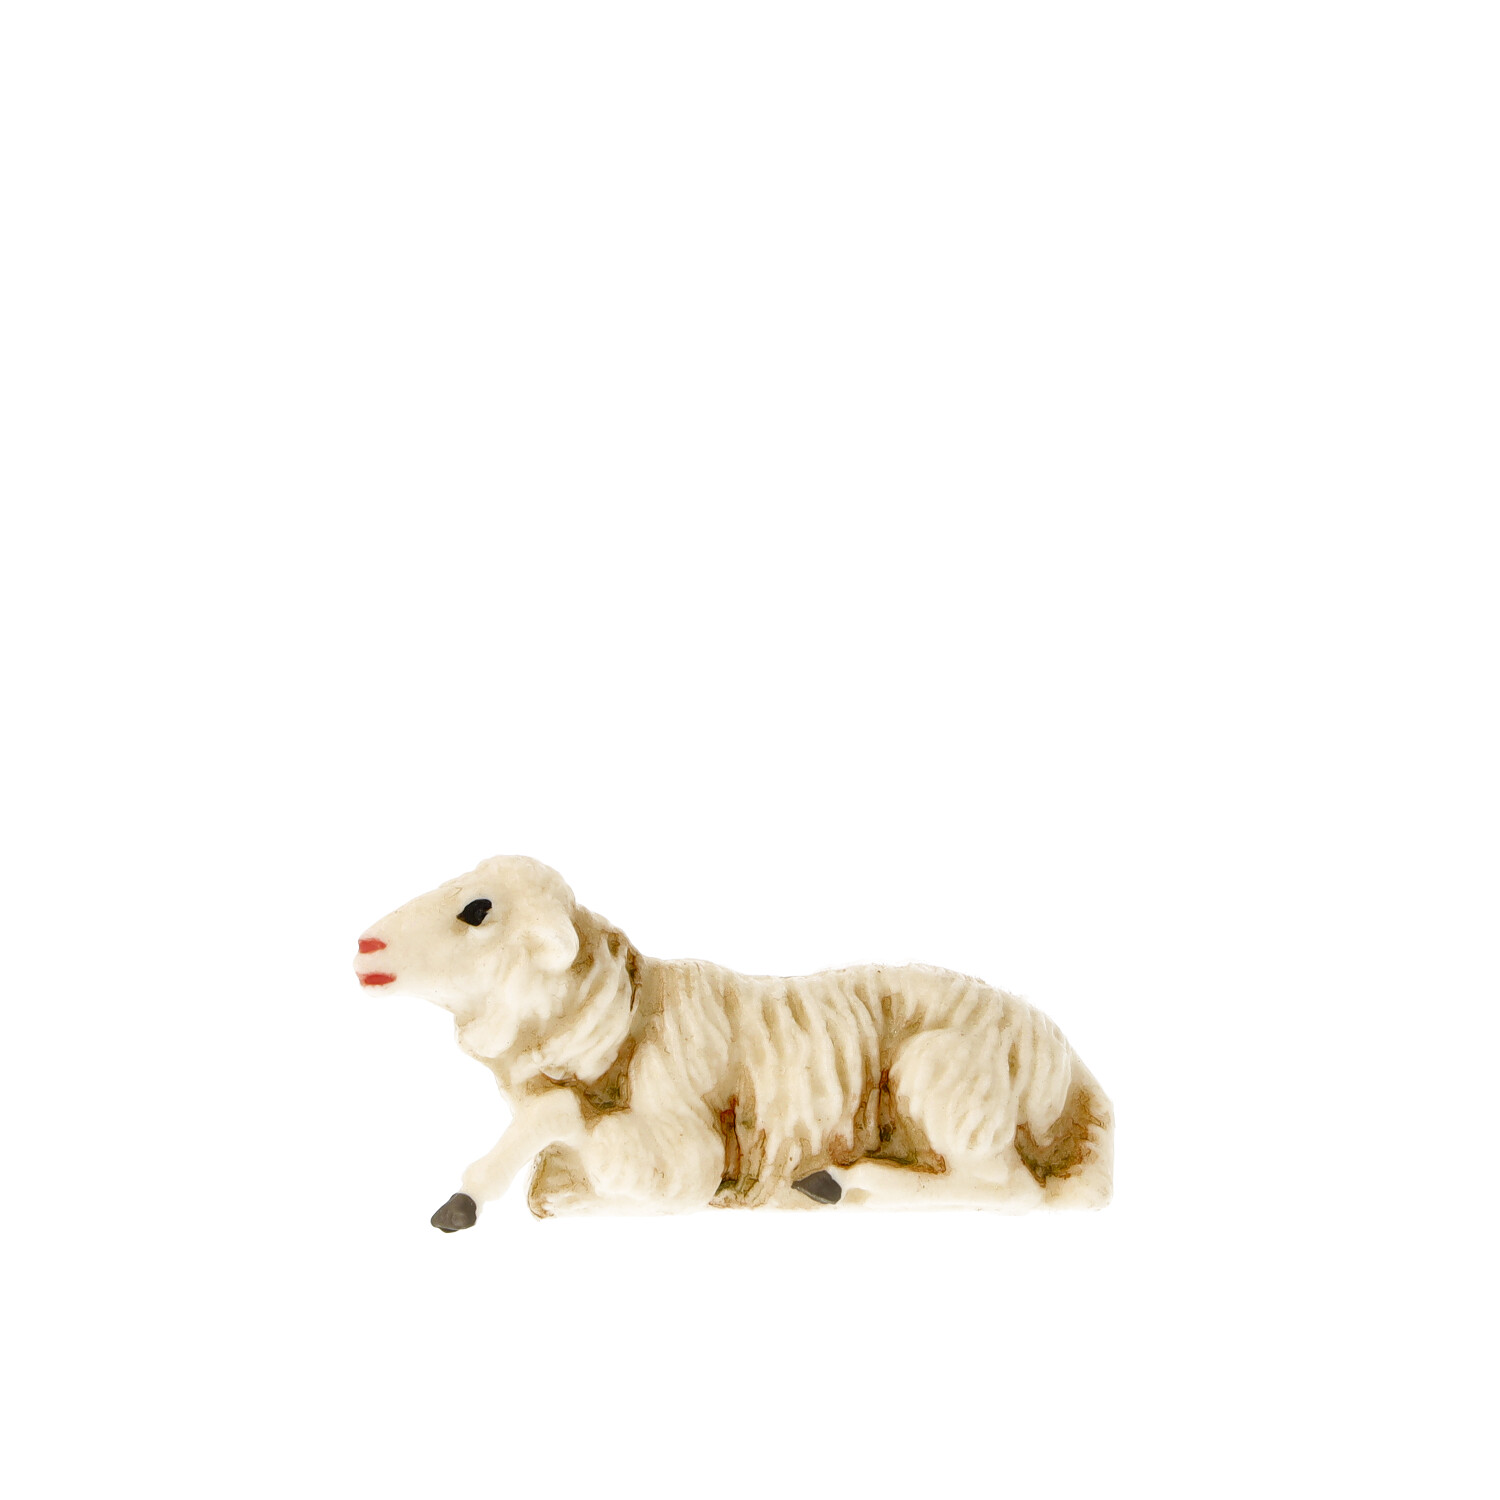 Schaf liegend, zu 9cm Fig. (Kunststoff)  - Marolin Plastik - Krippenfigur aus Kunststoff - made in Germany